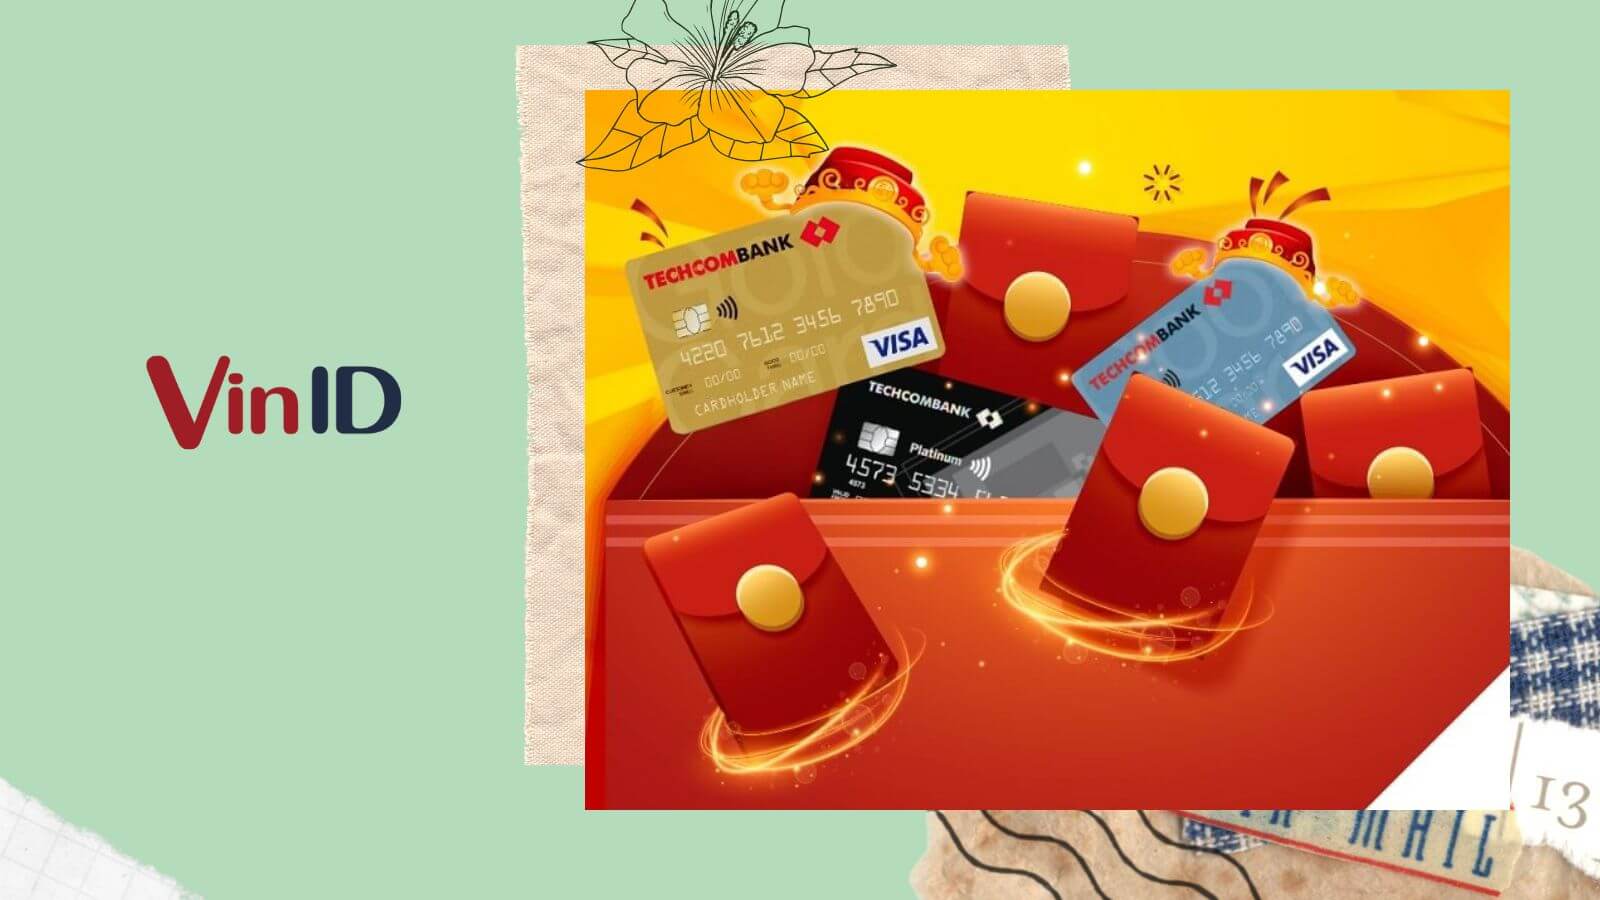 Thẻ Visa Platinum Techcombank là gì?
